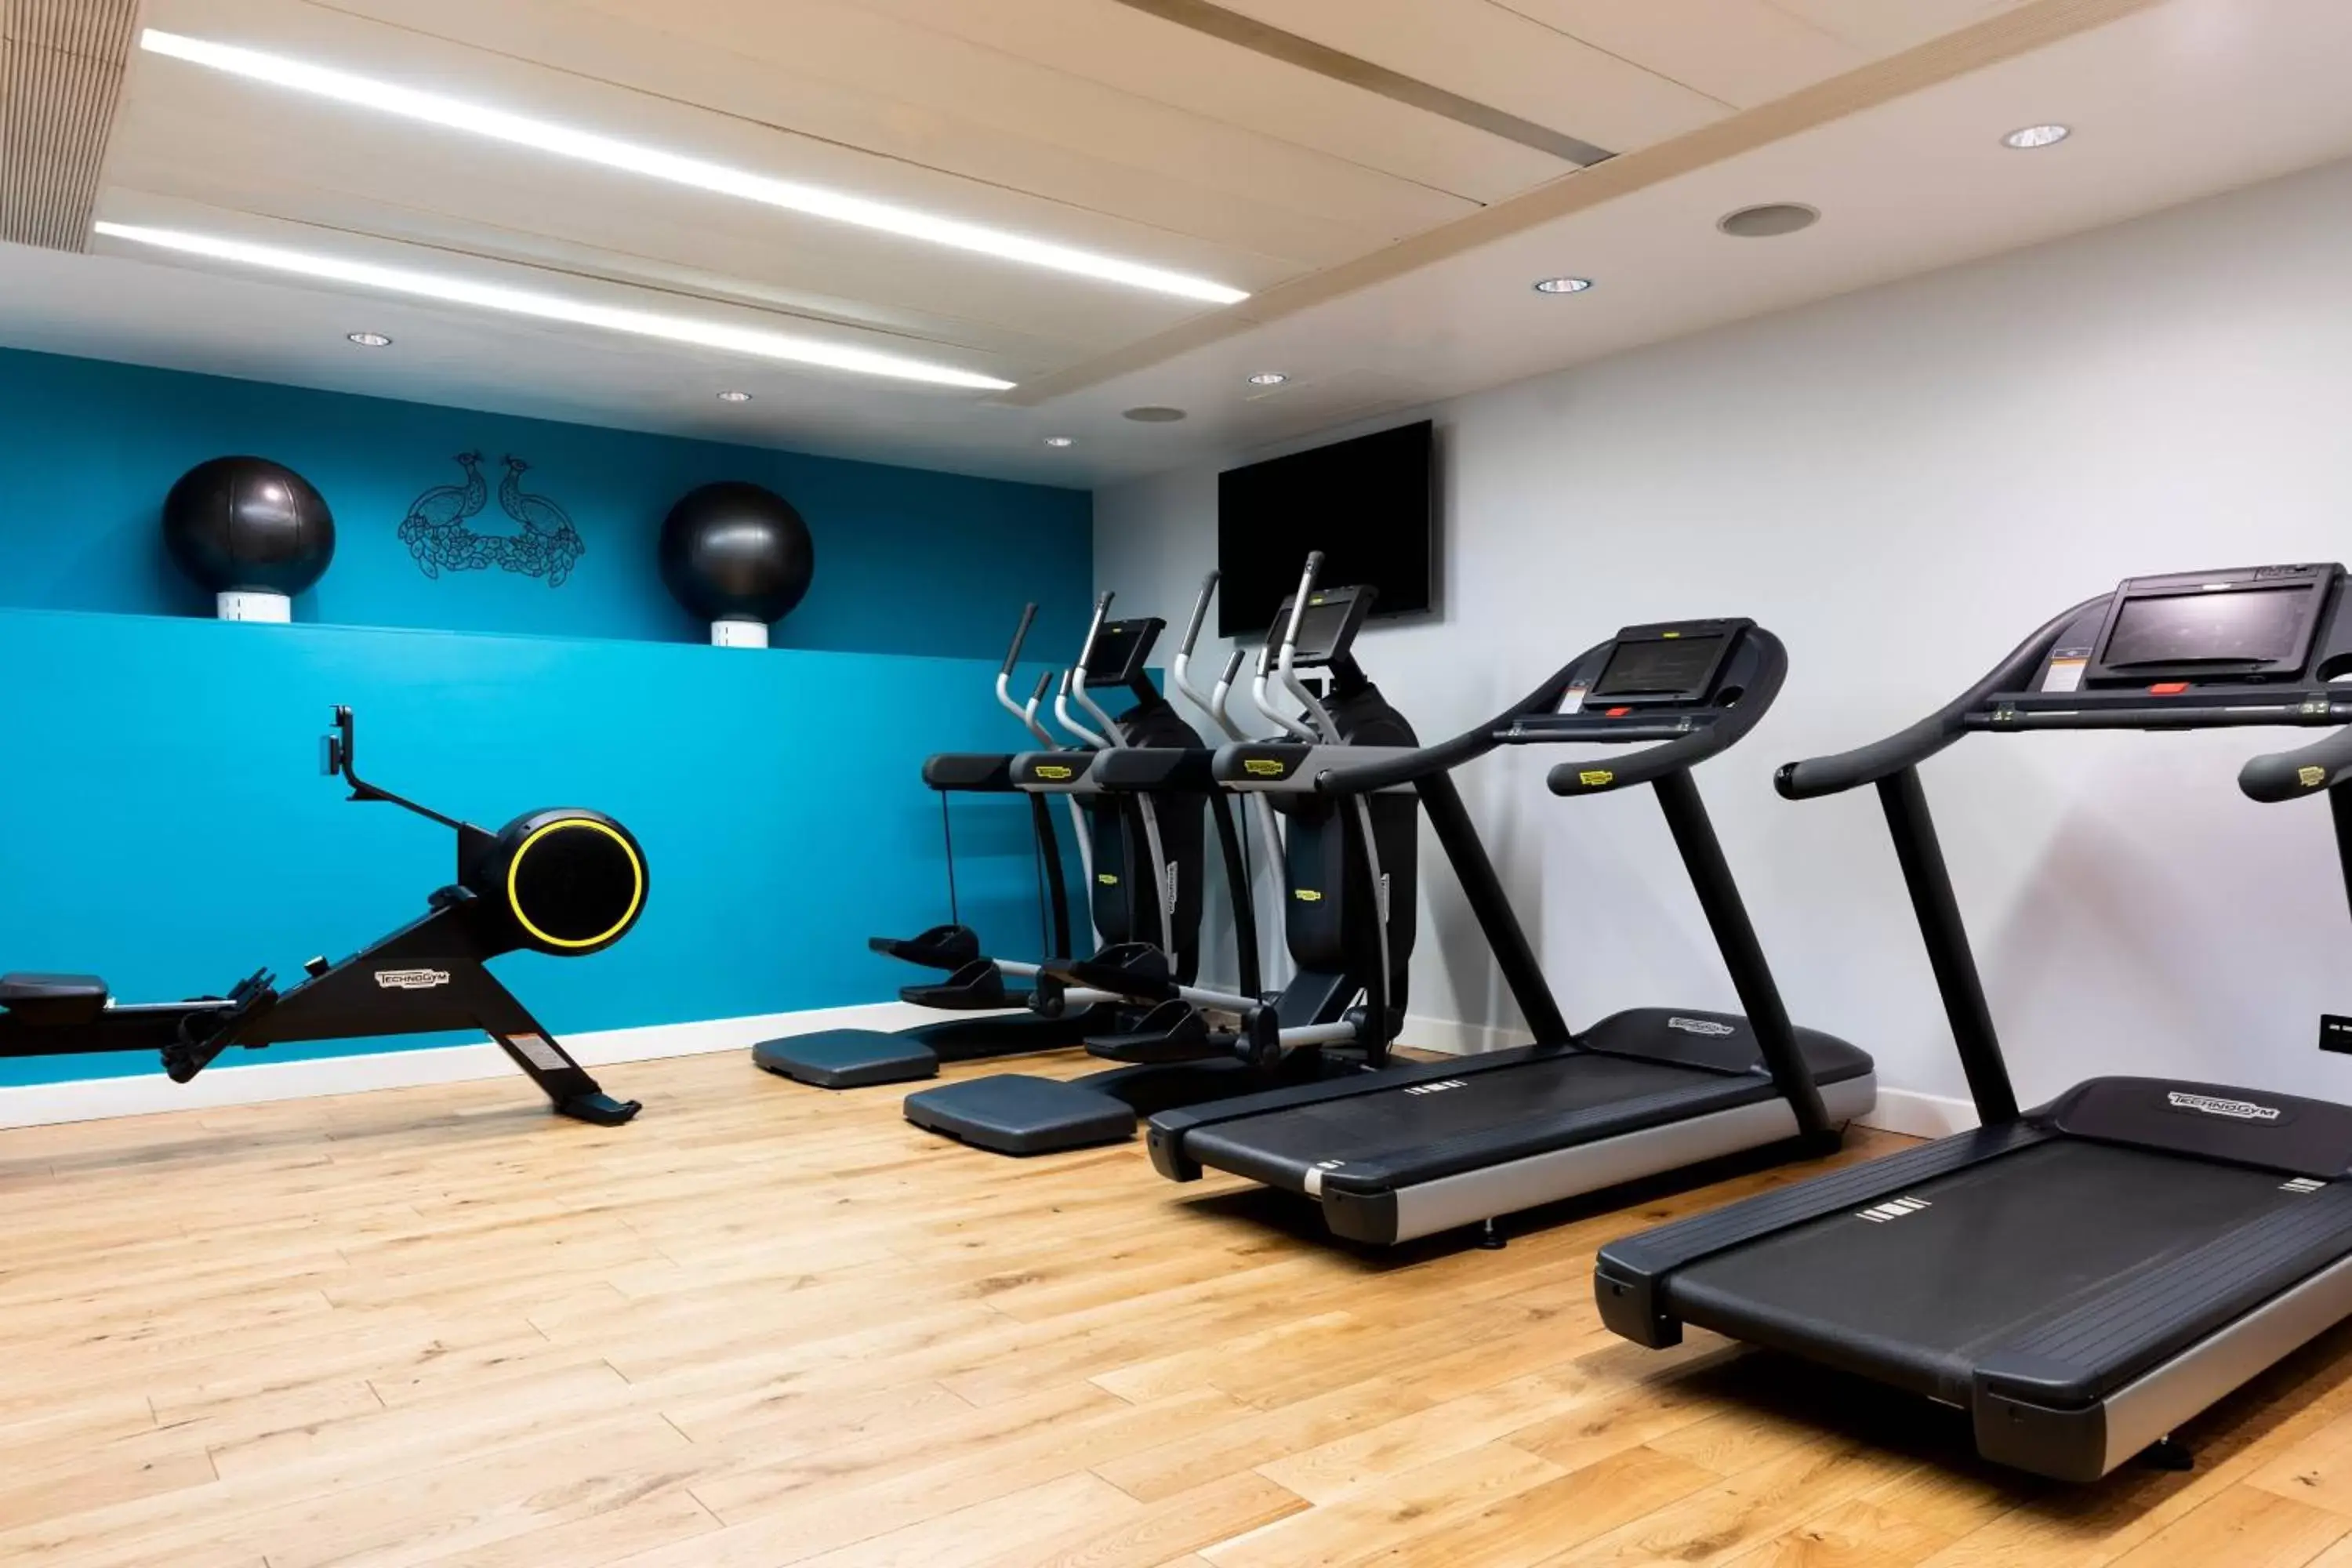 Fitness centre/facilities, Fitness Center/Facilities in St. Pancras Renaissance Hotel London